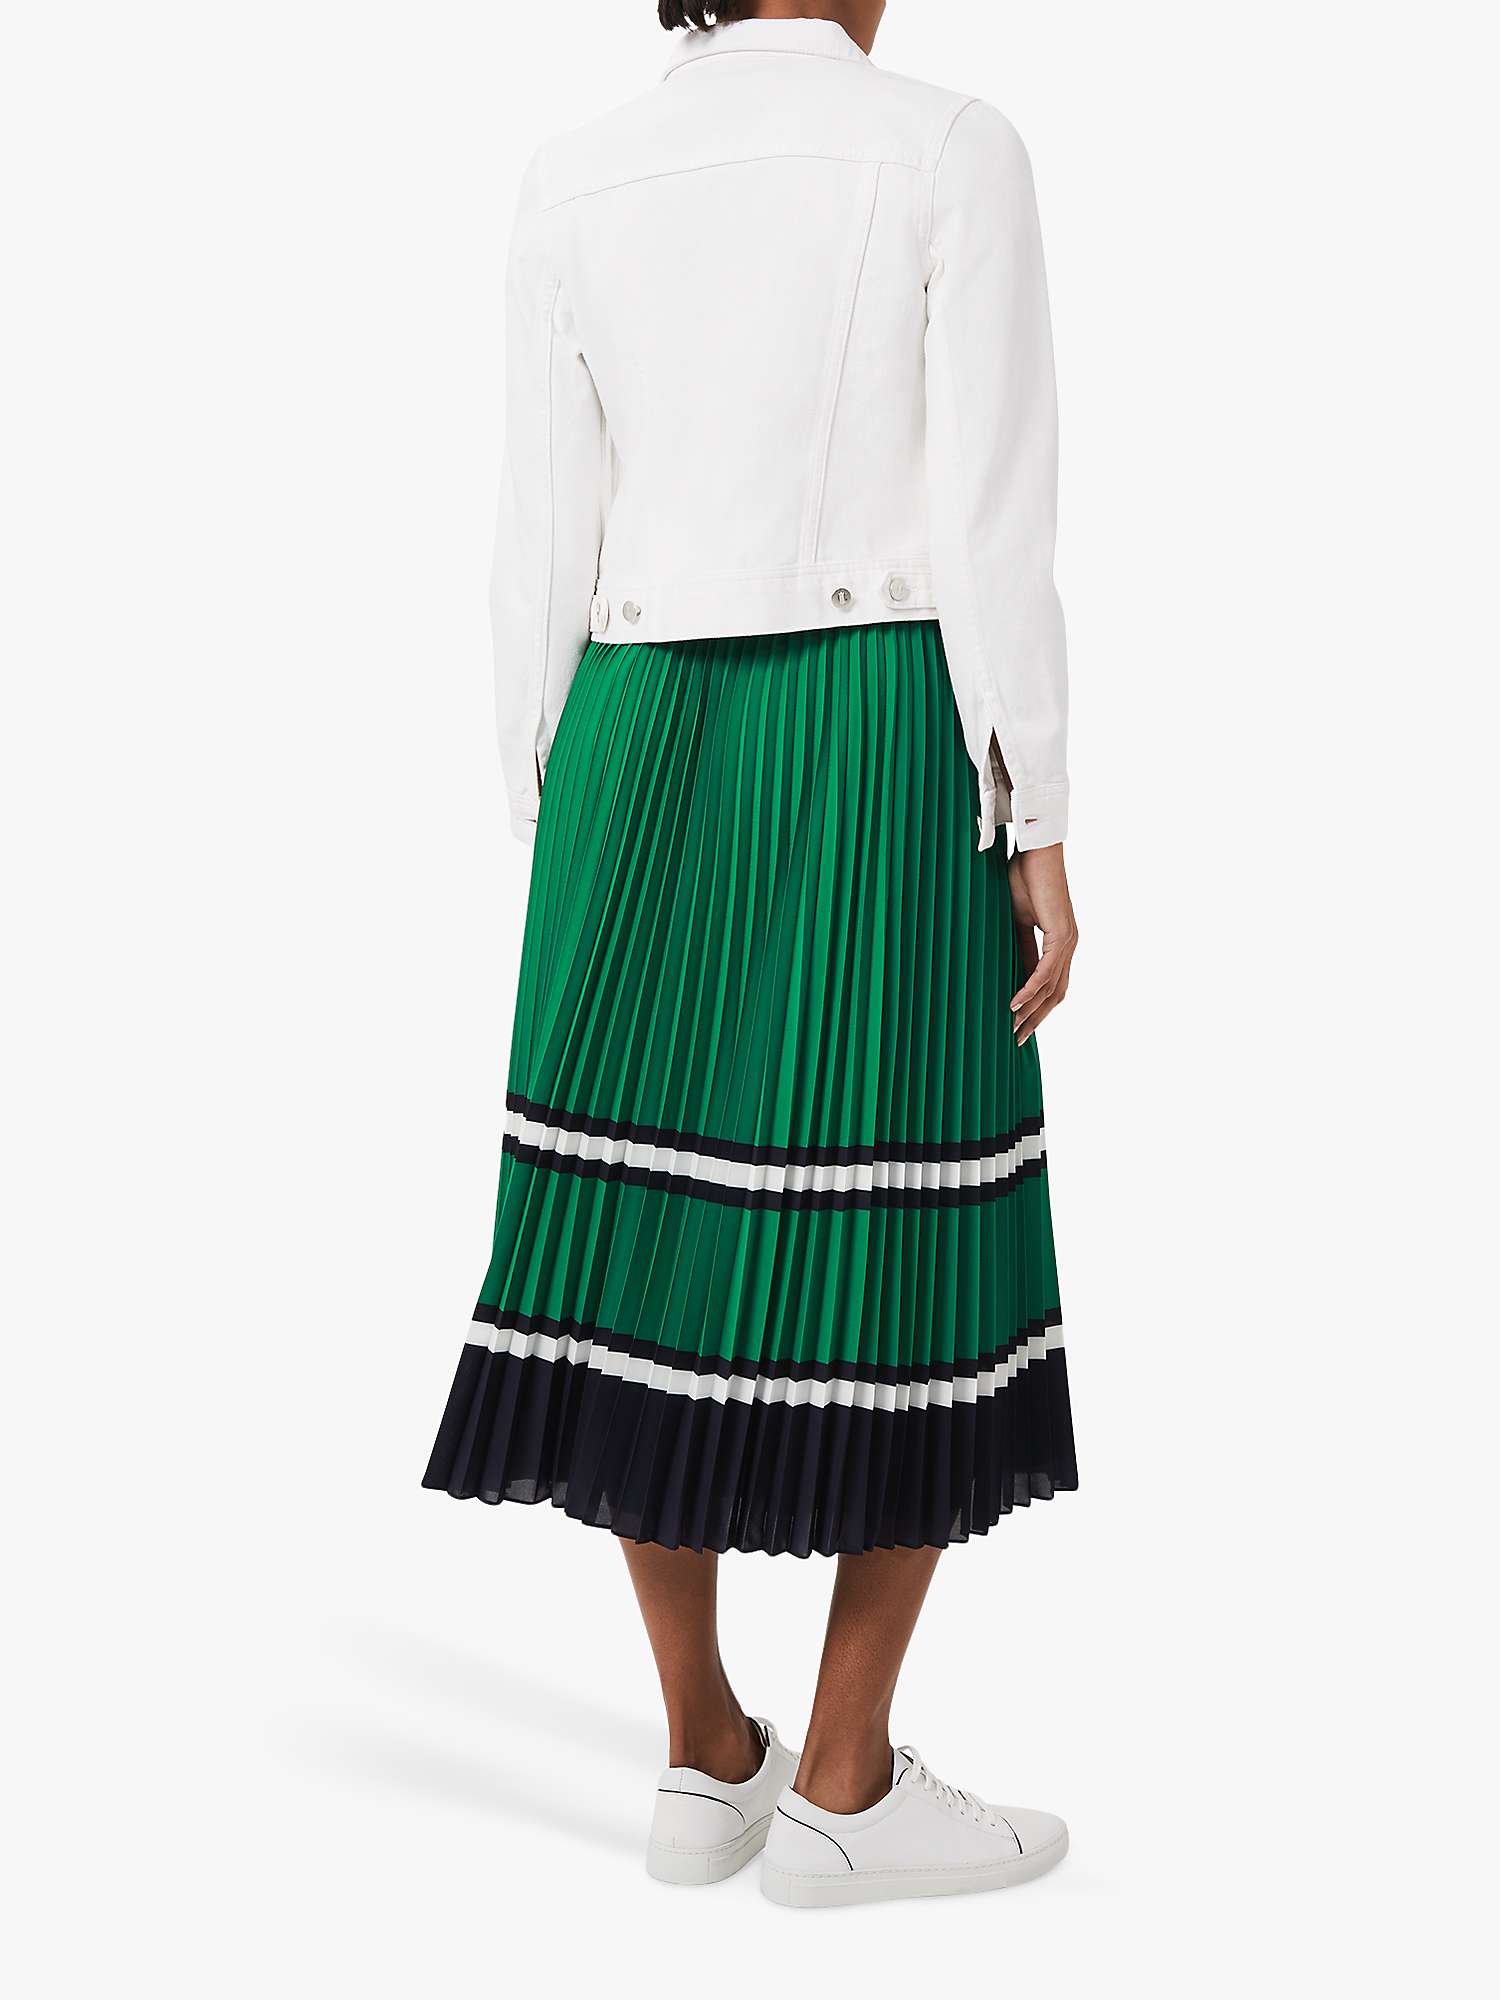 Hobbs Bess Pleat Skirt, Green/Multi at John Lewis & Partners